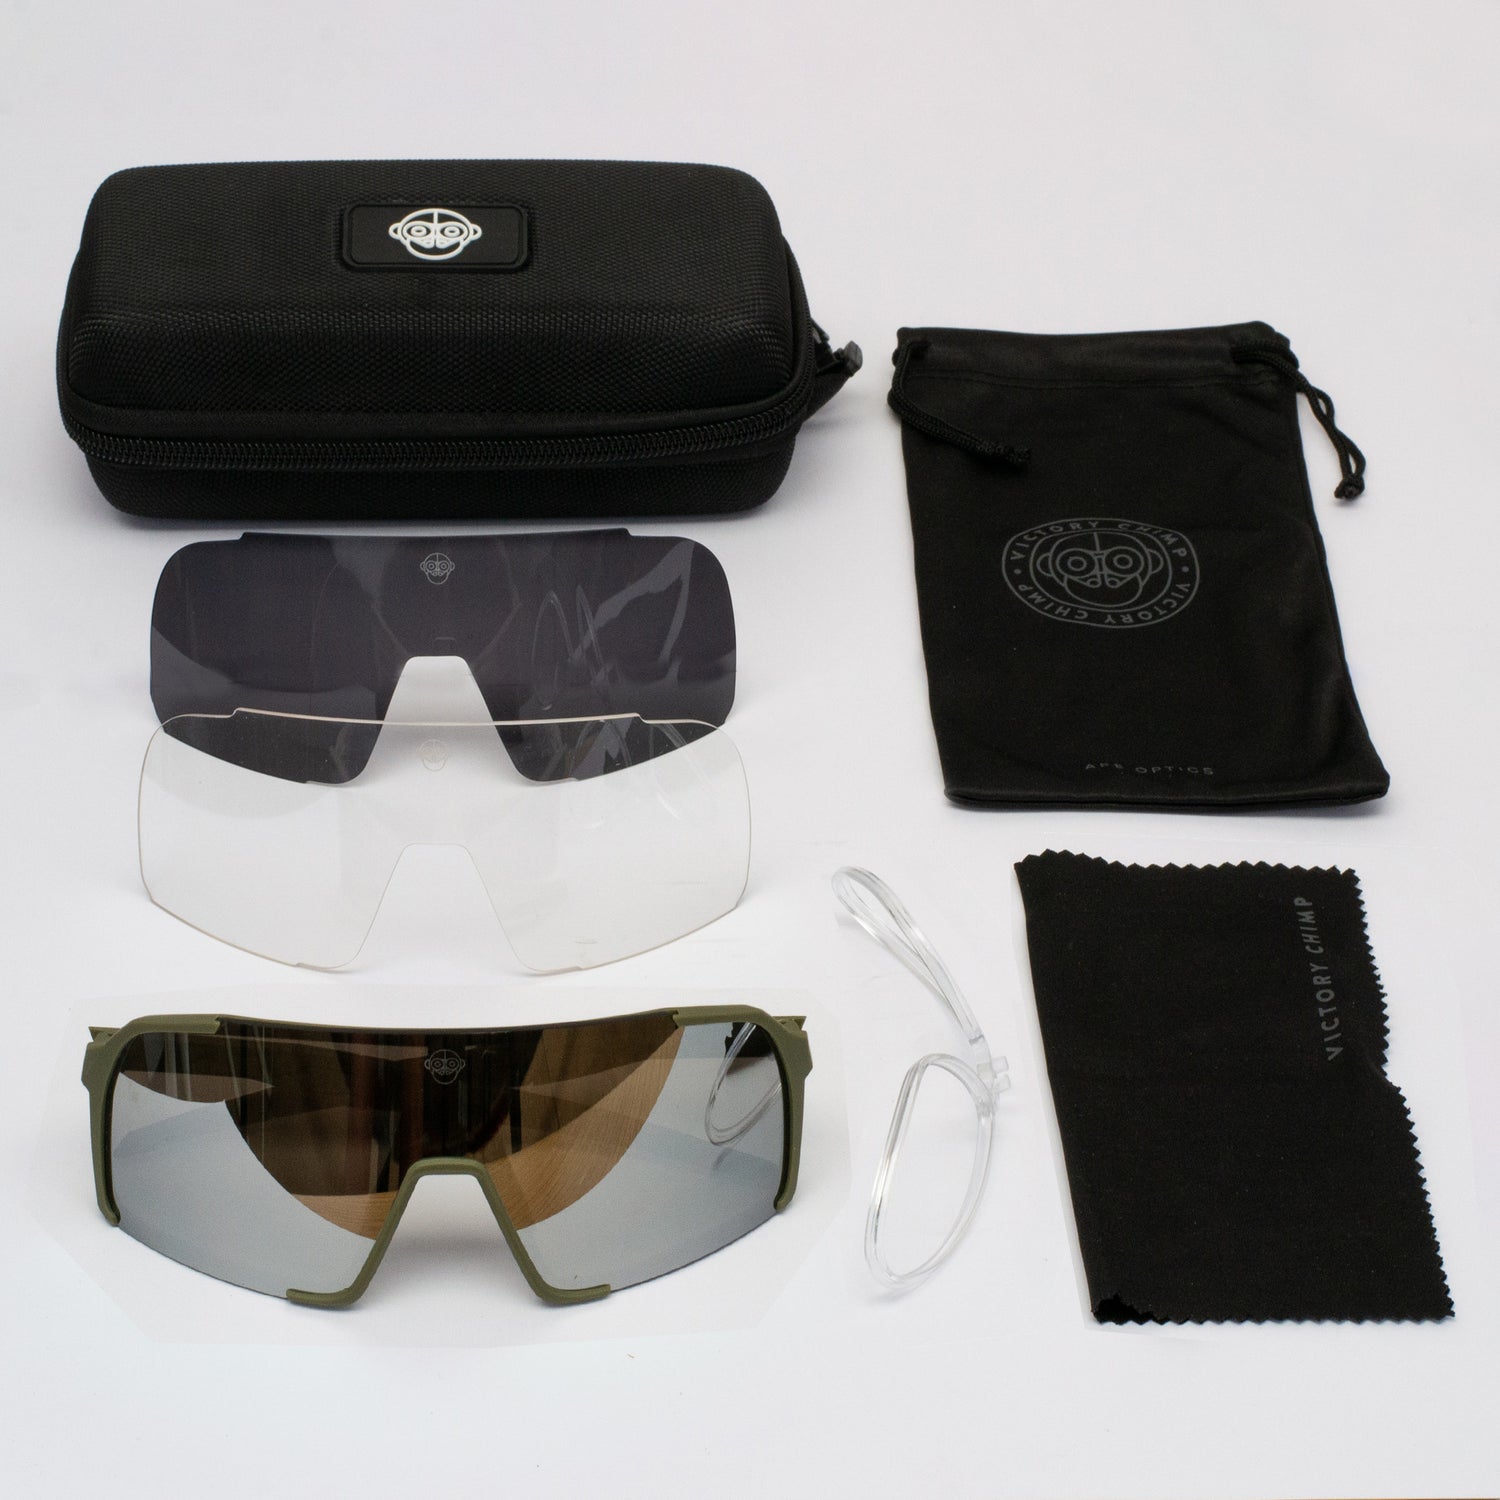 A.P.E. Optics Vega Evo Sunglasses (Matte Olive w/ Silver Mirror Lens)